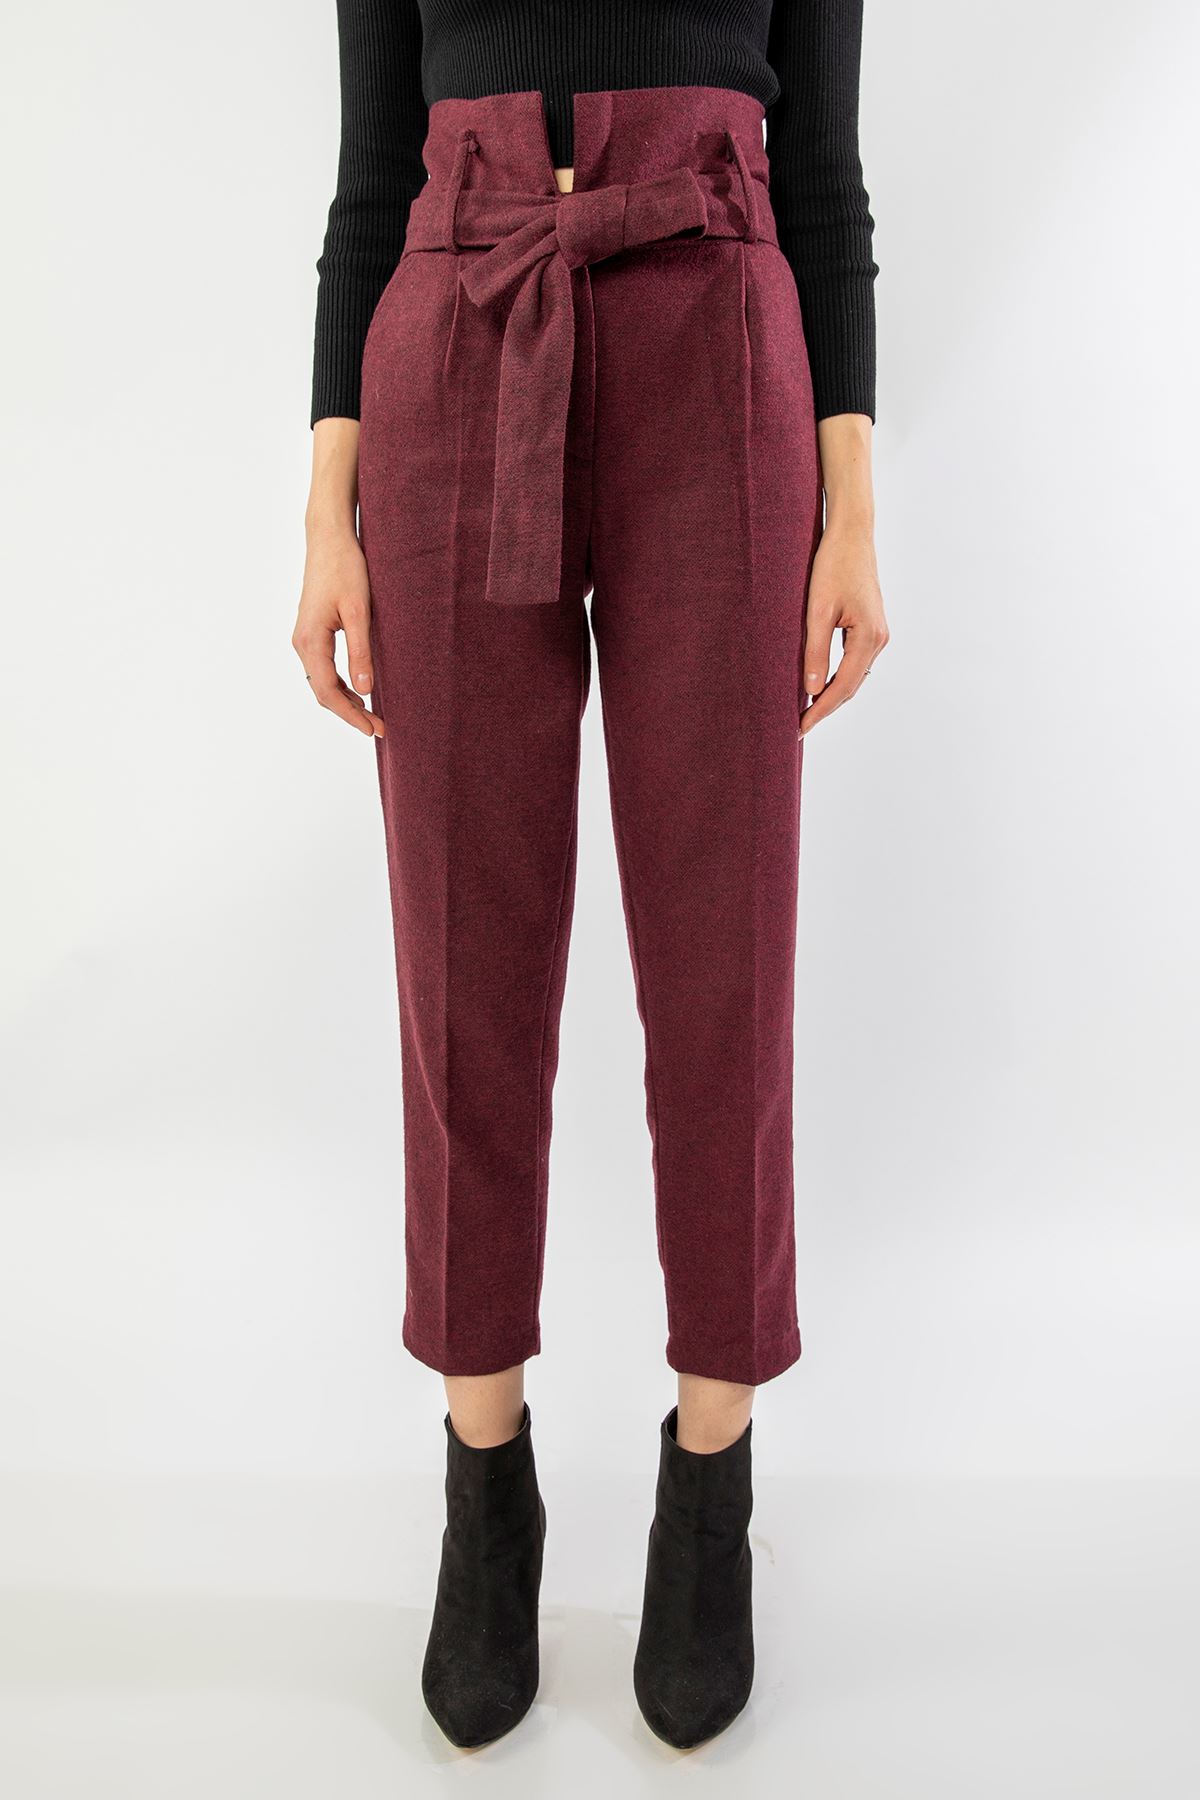 Woven Fabric Ankle Length Comfy High Waist Women'S Trouser - Burgundy